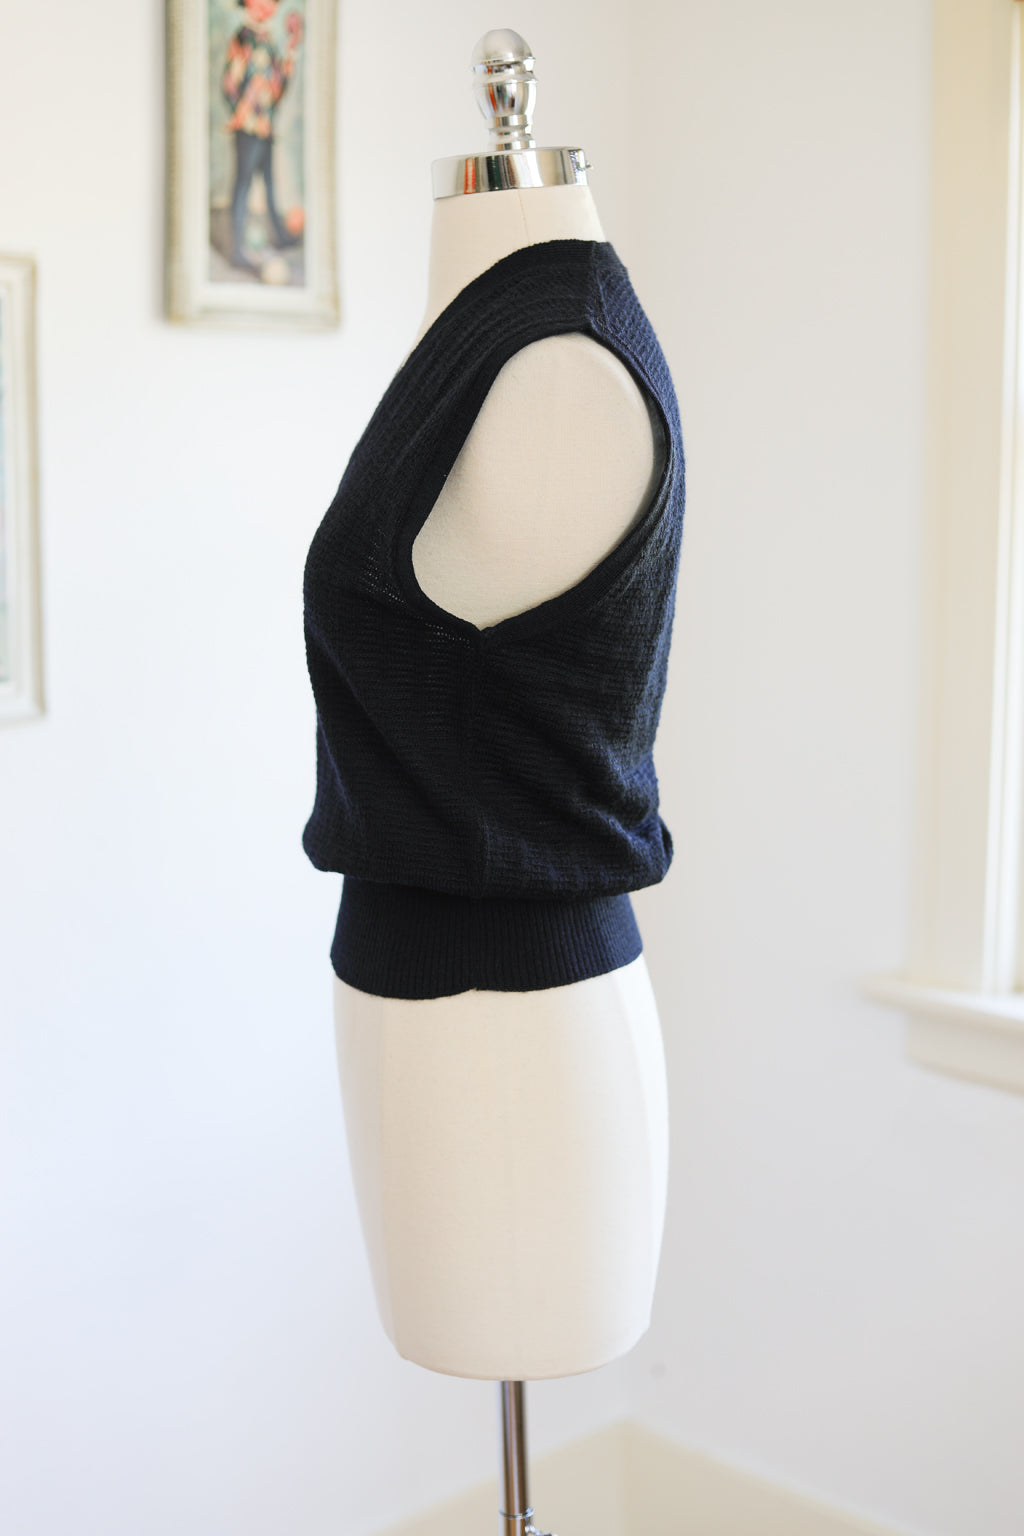 Vintage DEADSTOCK 1940s Knit Vest Top - Navy Blue All-Wool Canadian Sporty Knitwear Sweater Waistcoat Dark Academia - Choose Yours!